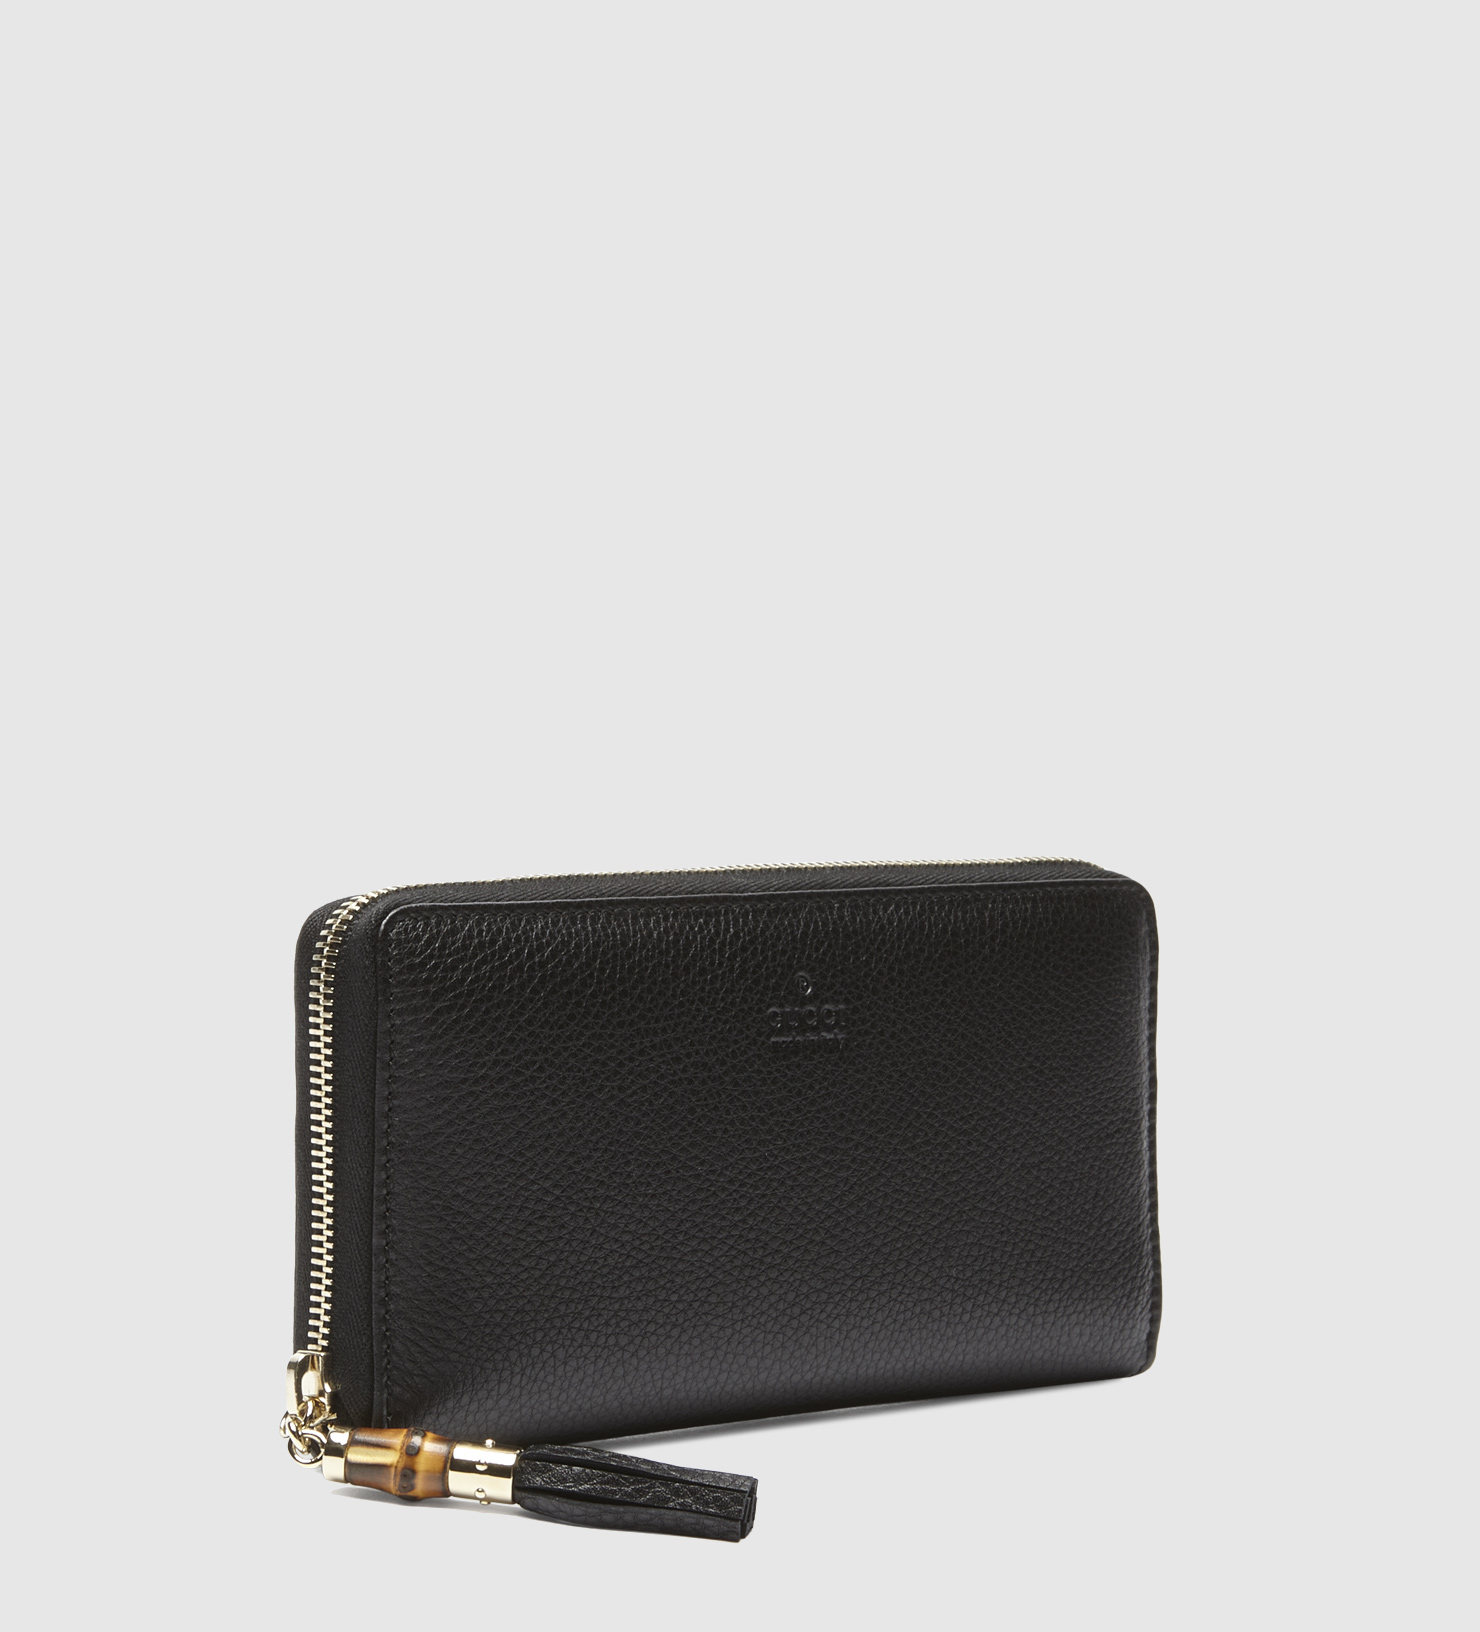 Gucci Bamboo Tassel Leather Zip Around Wallet in Black - Lyst